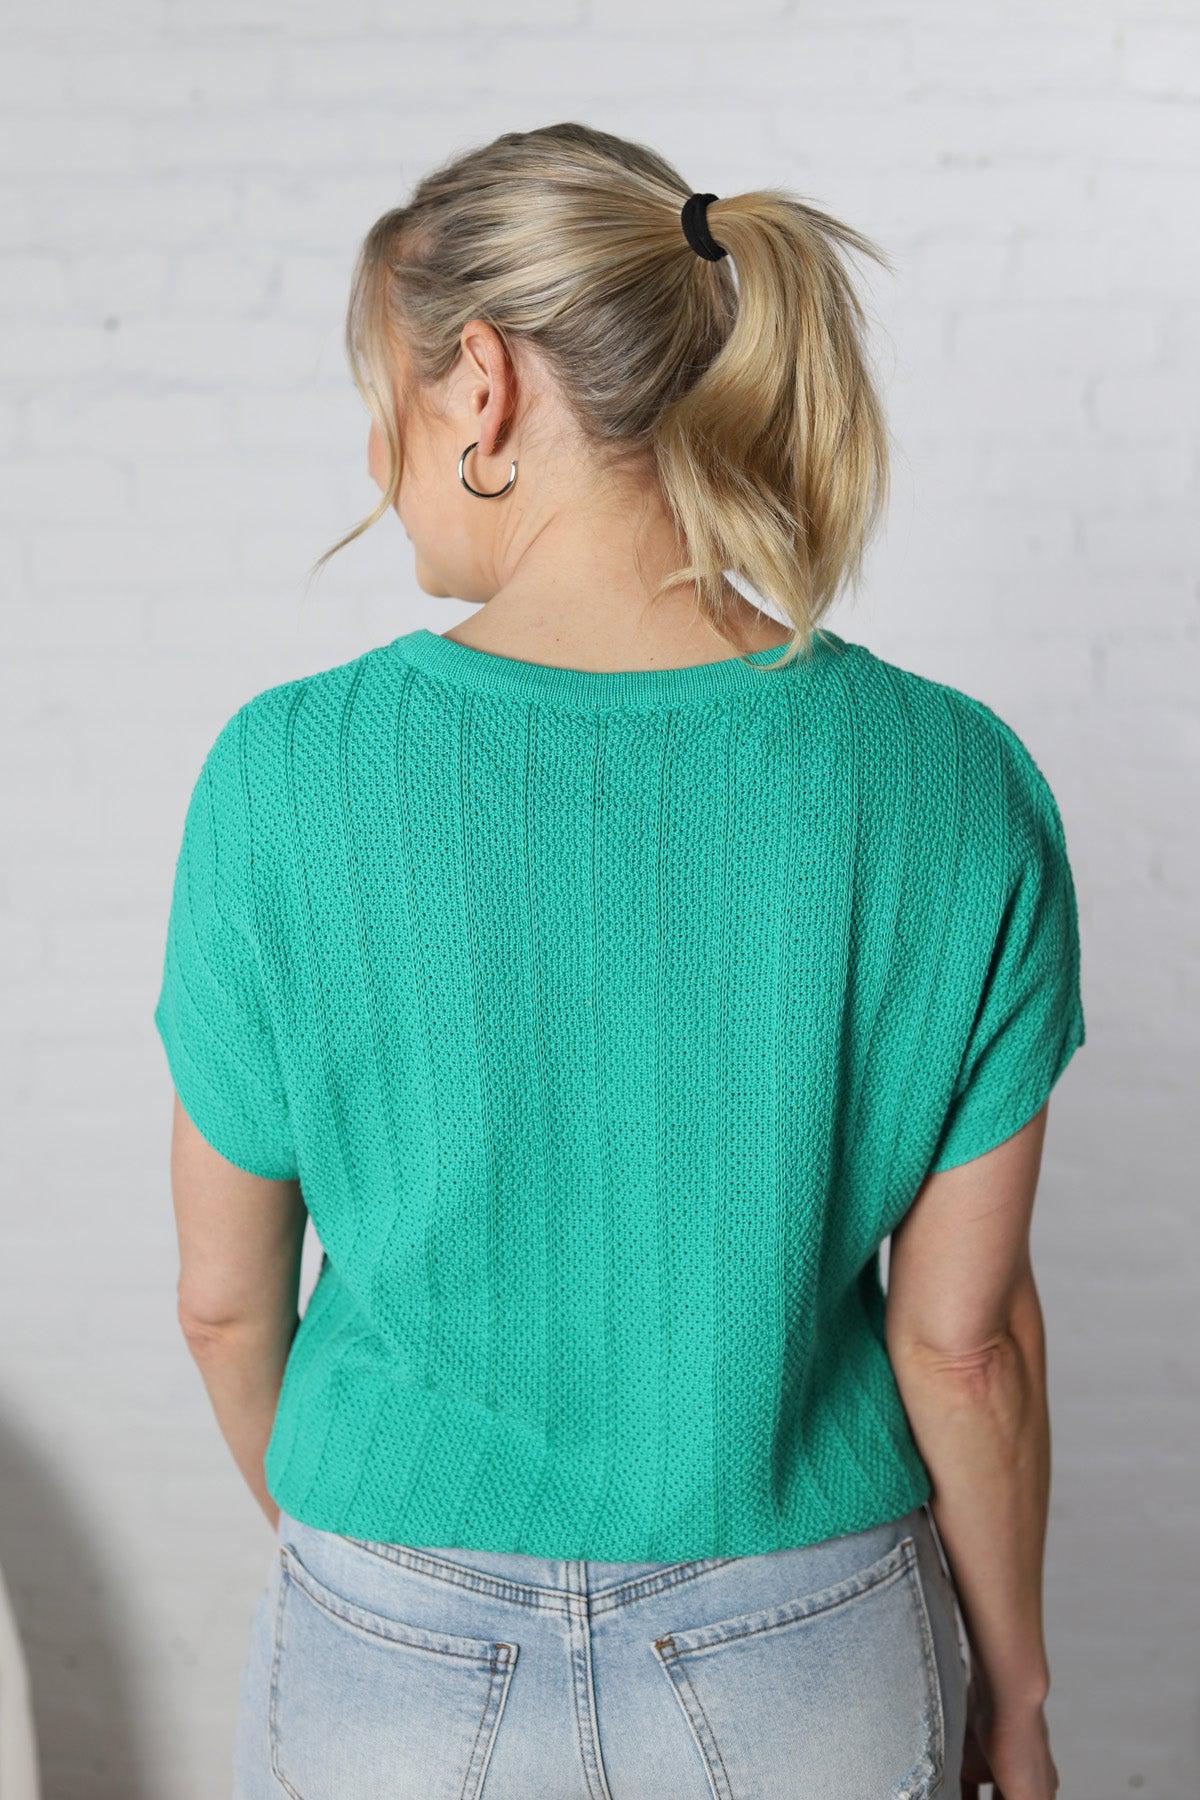 Briar Textured Sweater Top - Emerald